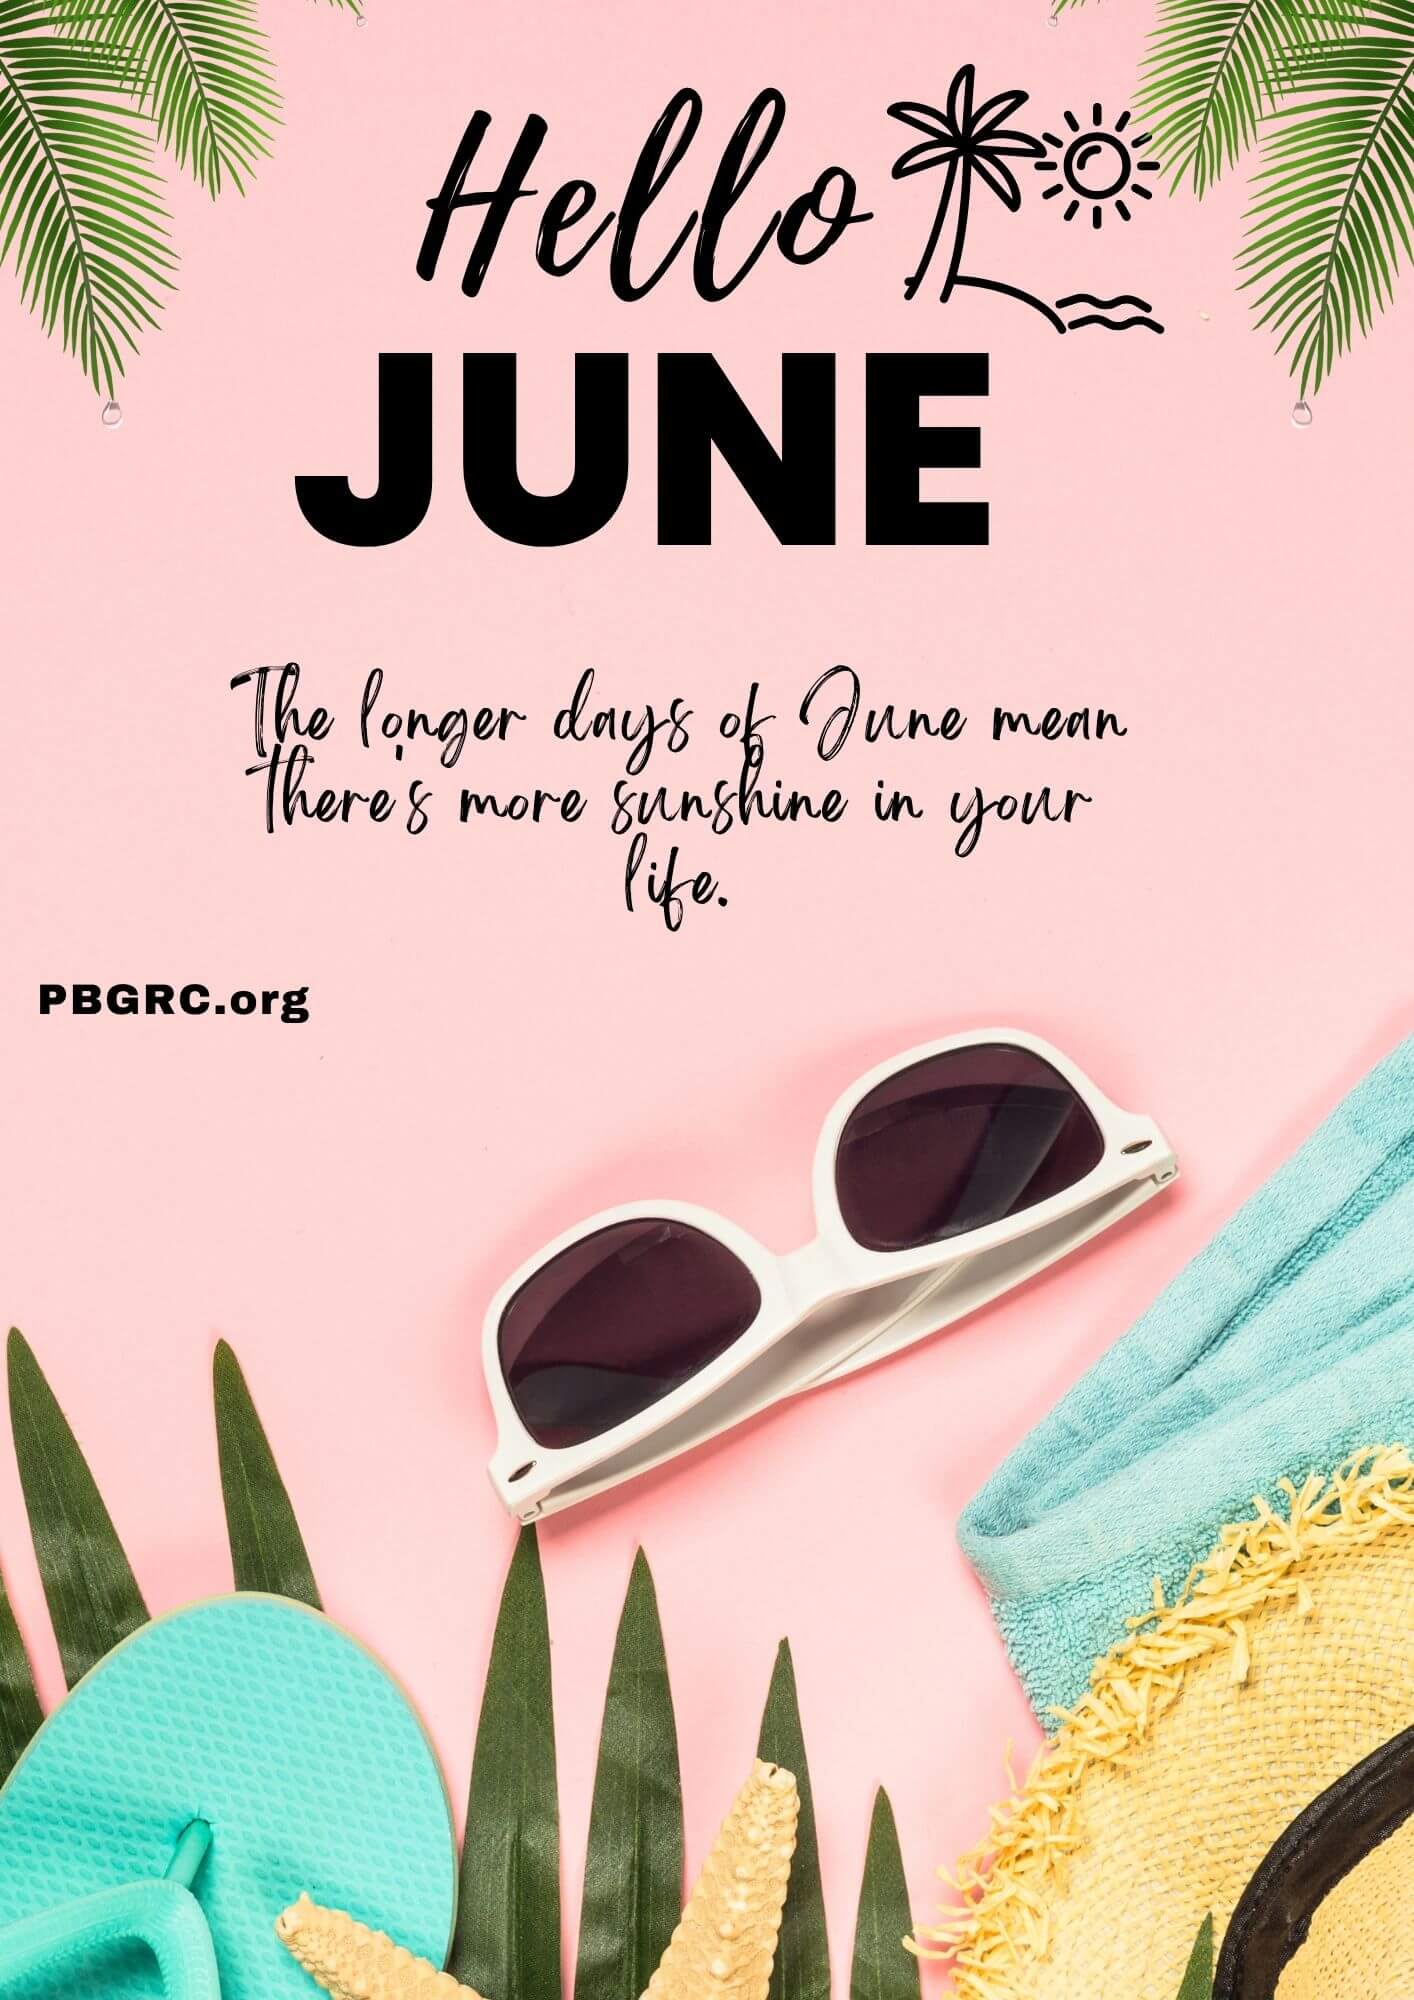 June 1st hello June quotes